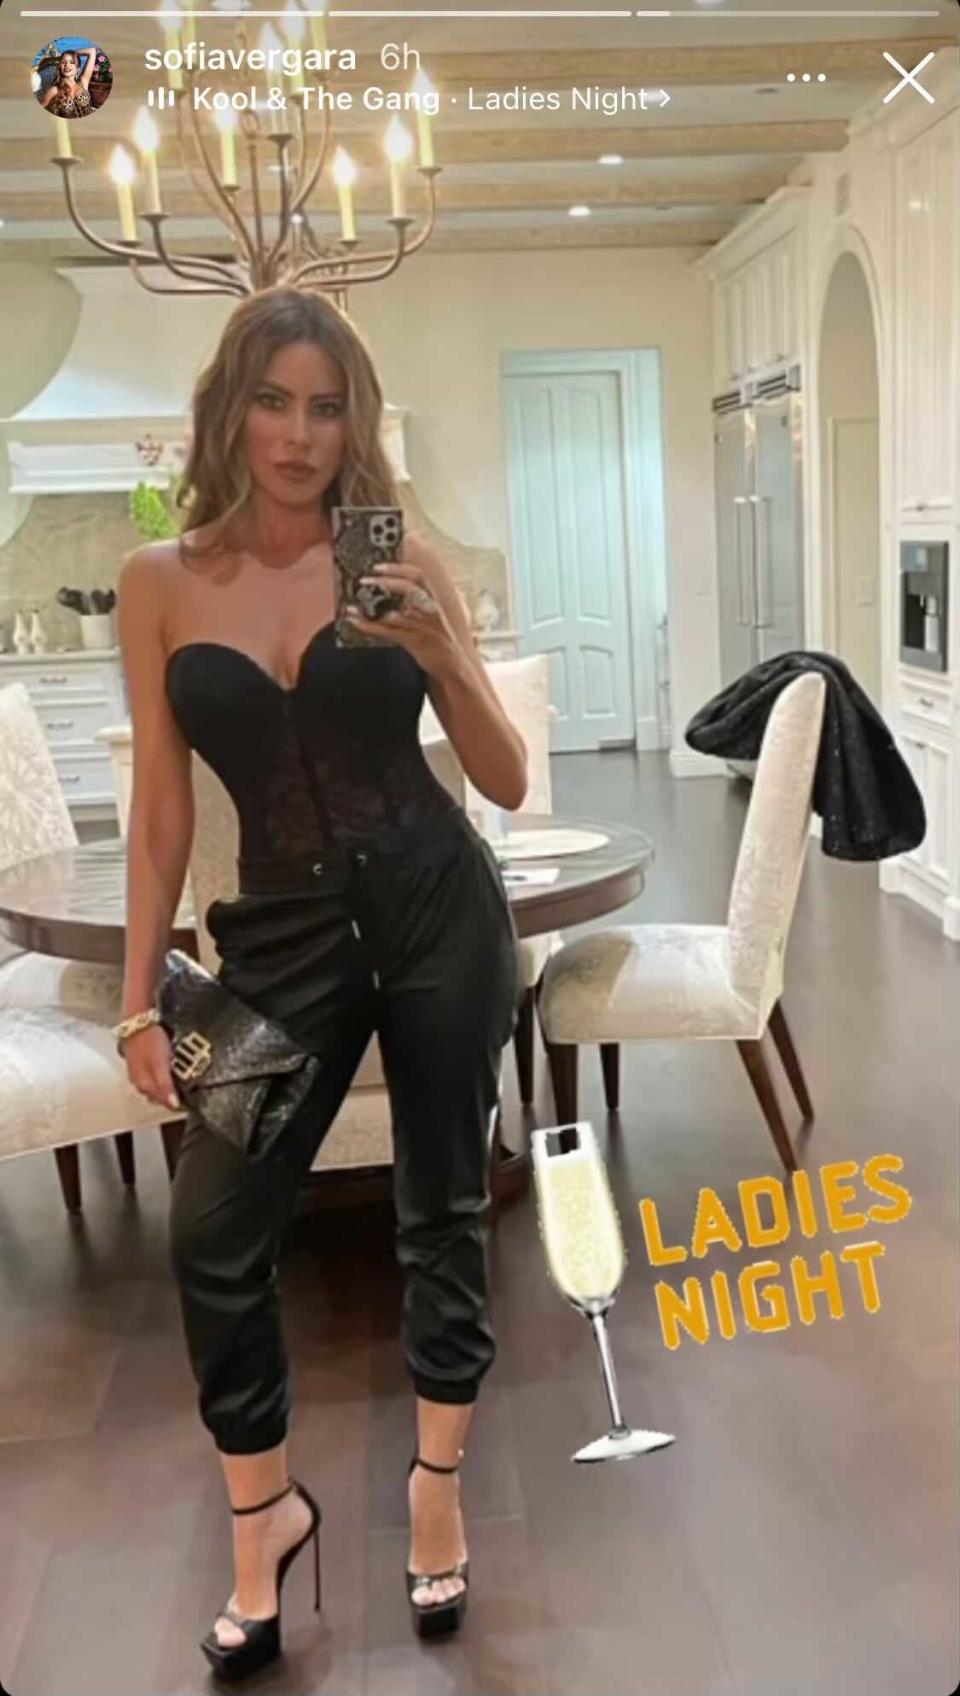 Sofia Vergara poses in a mirror selfie ahead of “ladies night,” Sept 29. - Credit: Courtesy of Sofia Vergara/Instagram